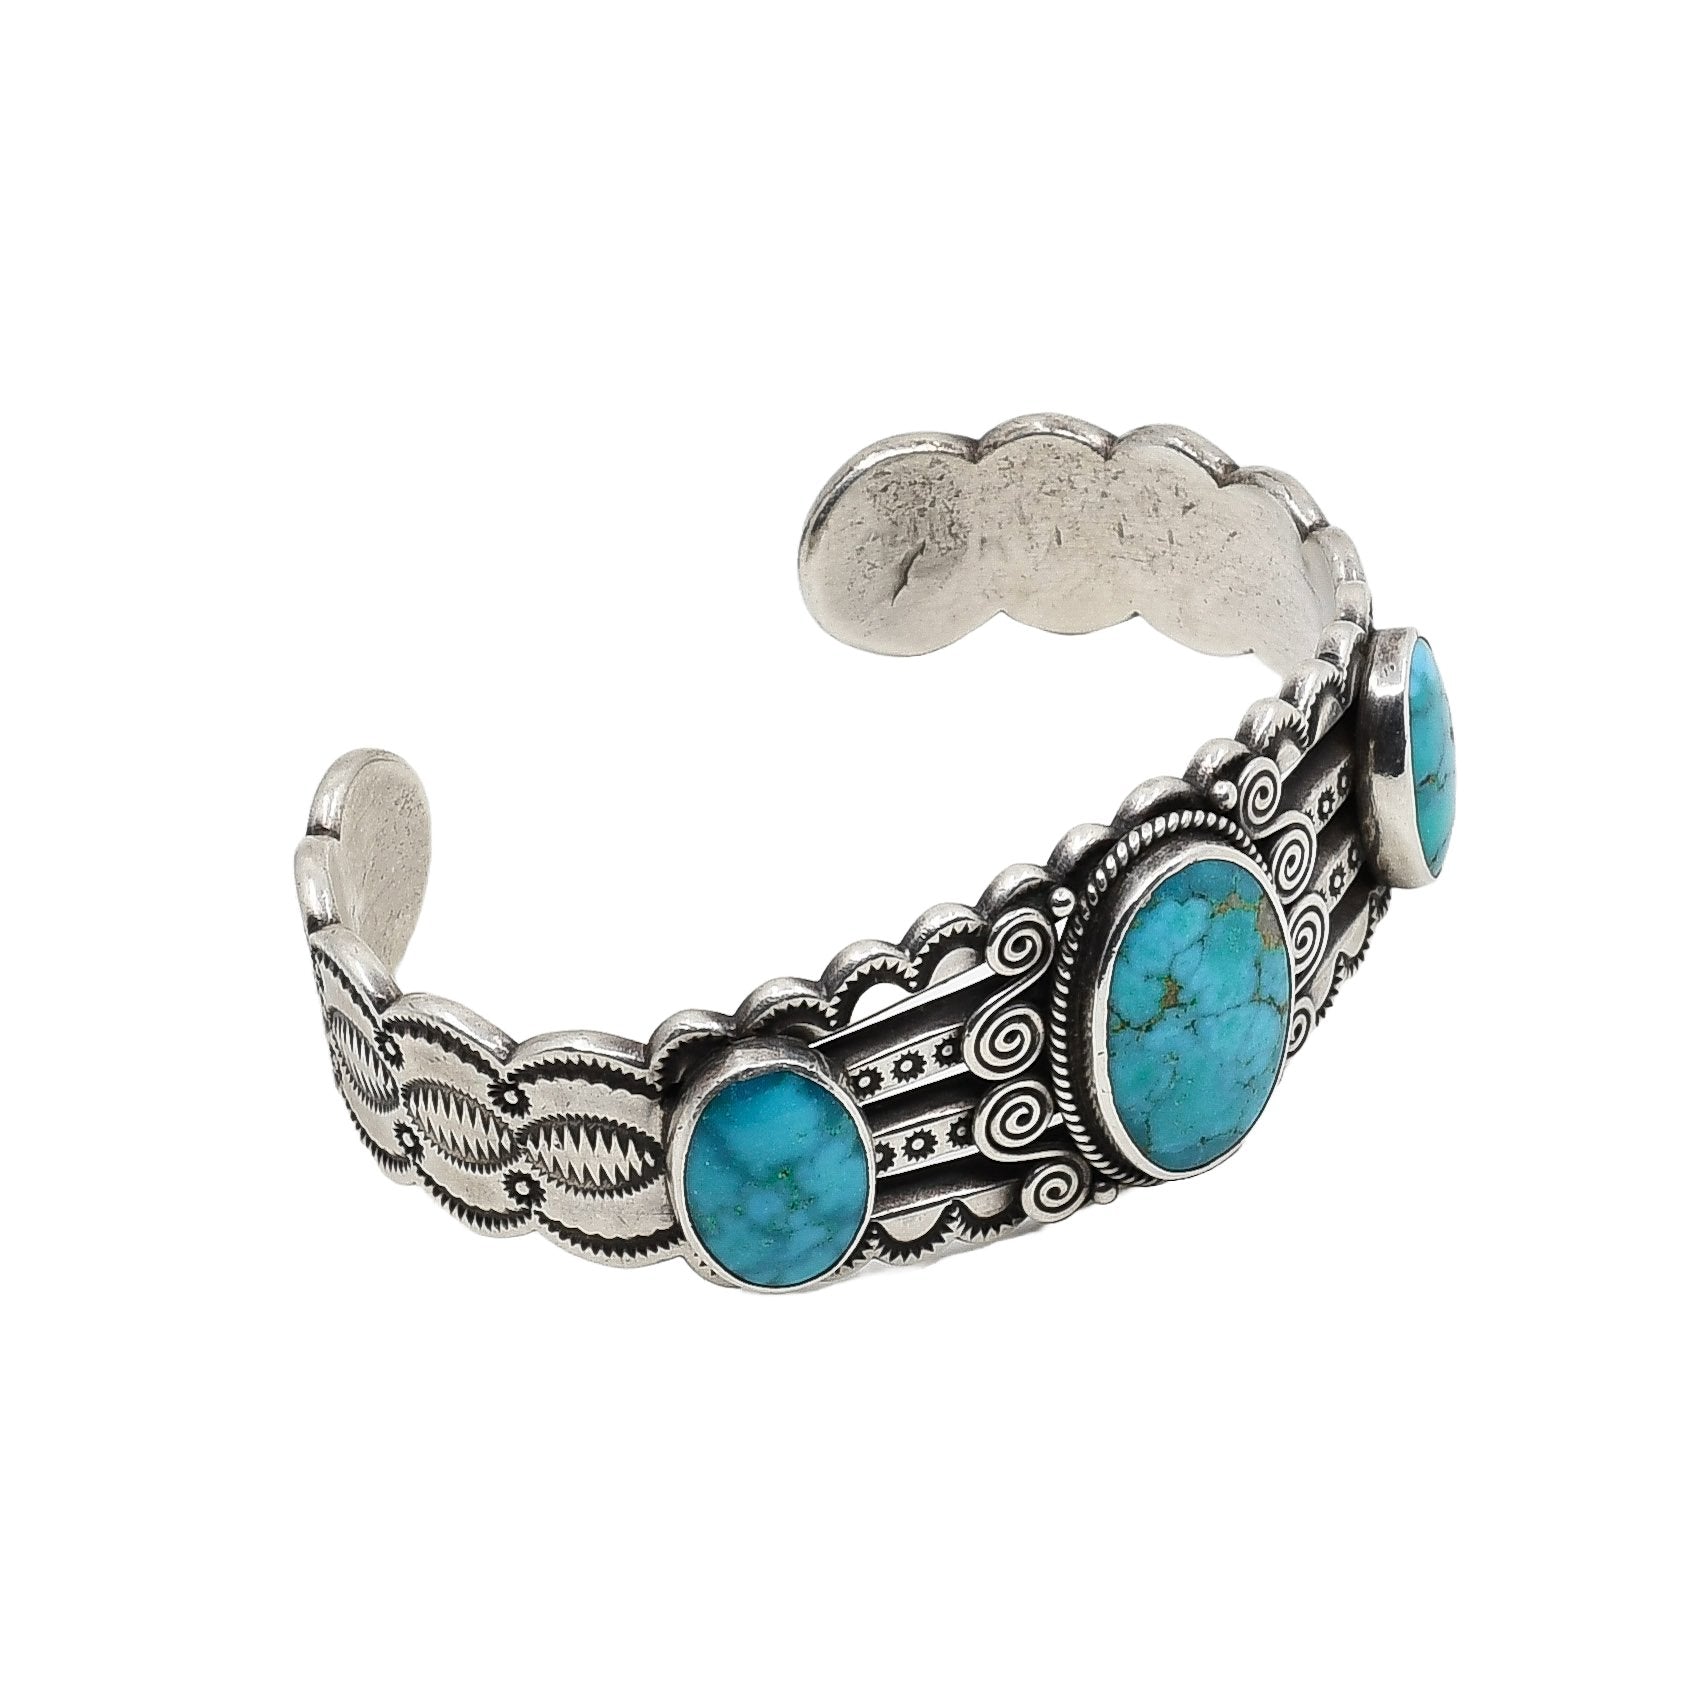 Perry Shorty Bracelet of Three Turquoise Stones - Turquoise & Tufa